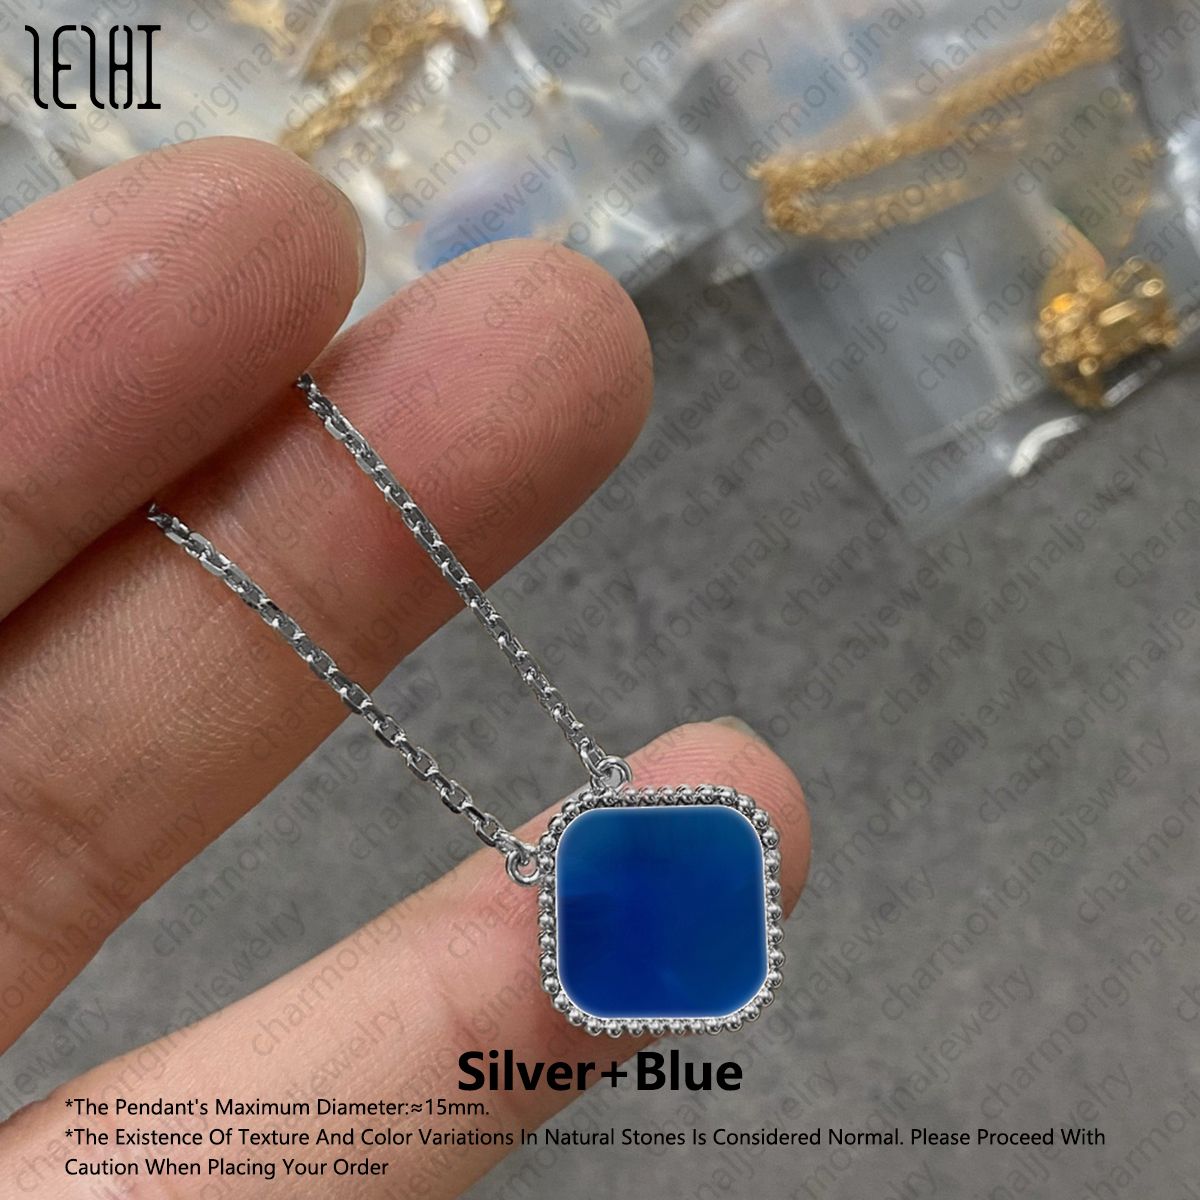 silver+blue